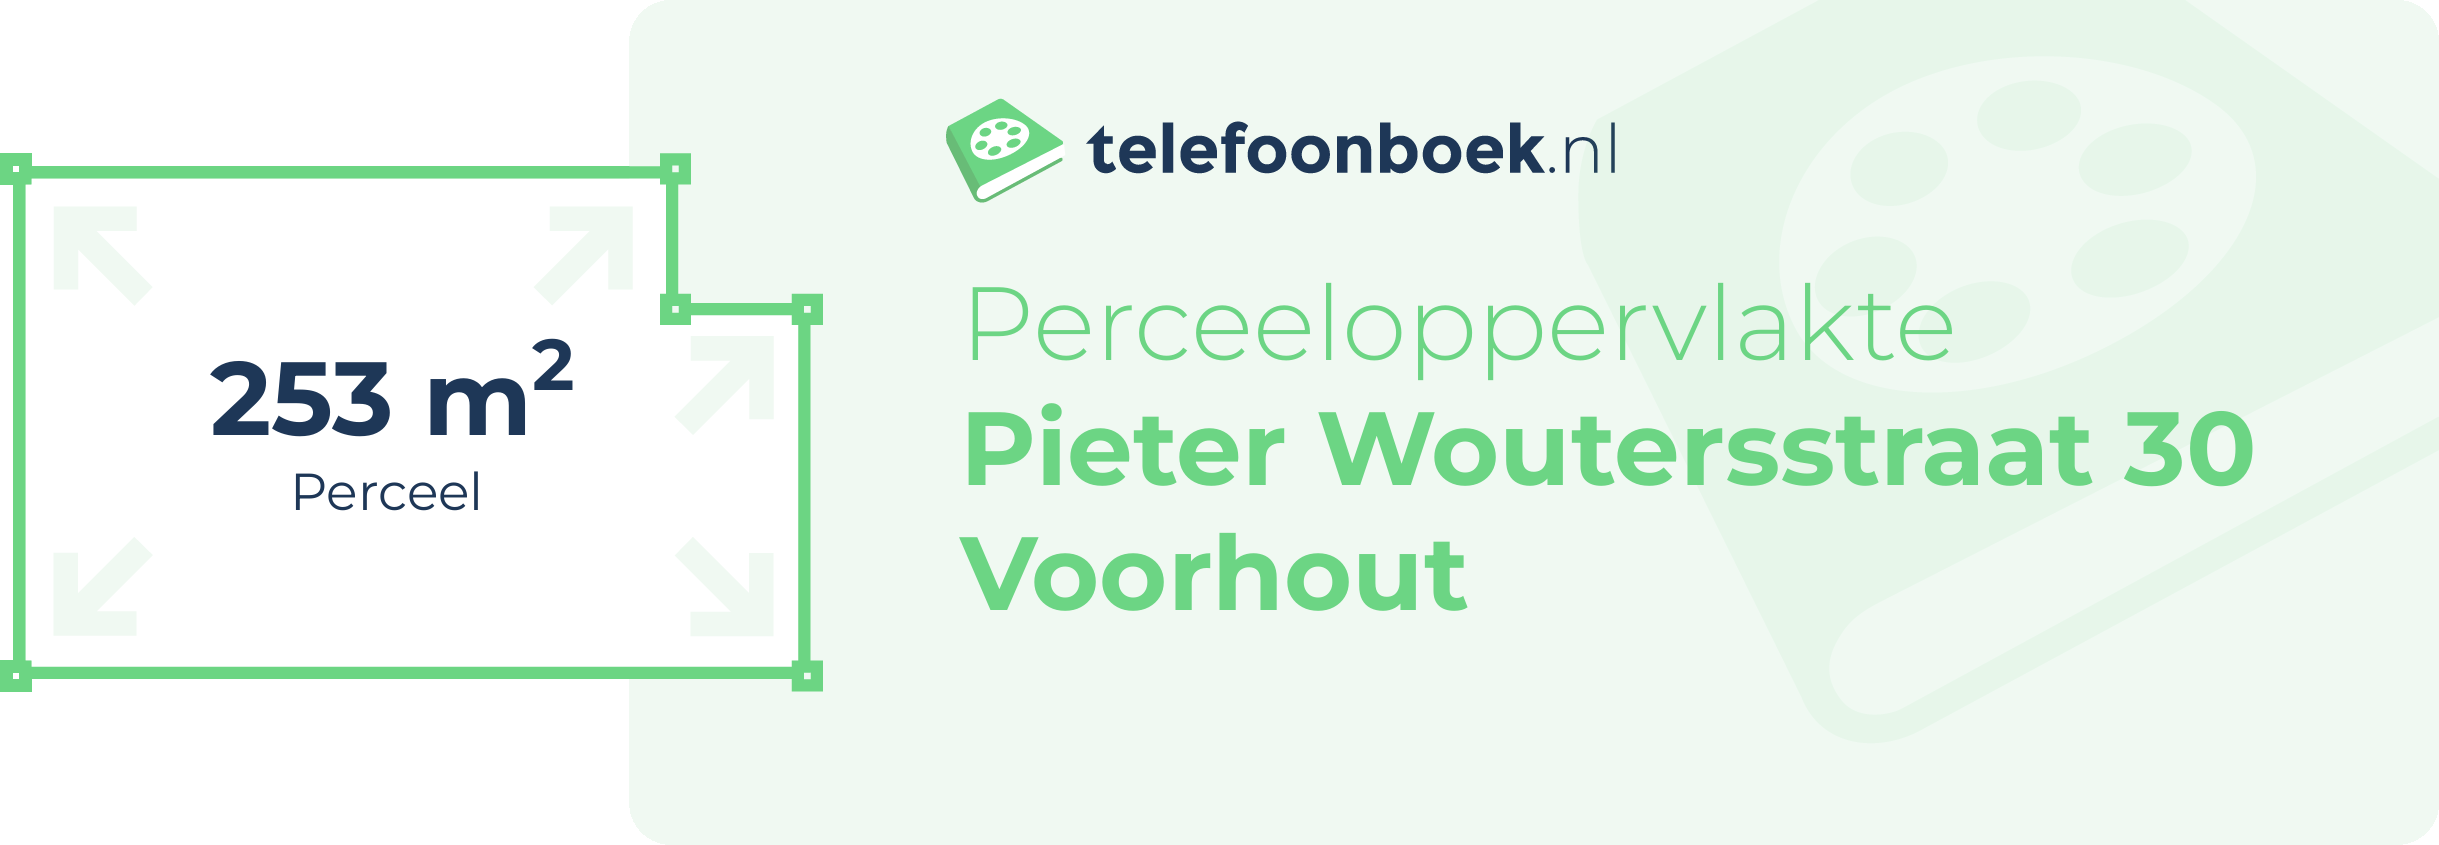 Perceeloppervlakte Pieter Woutersstraat 30 Voorhout